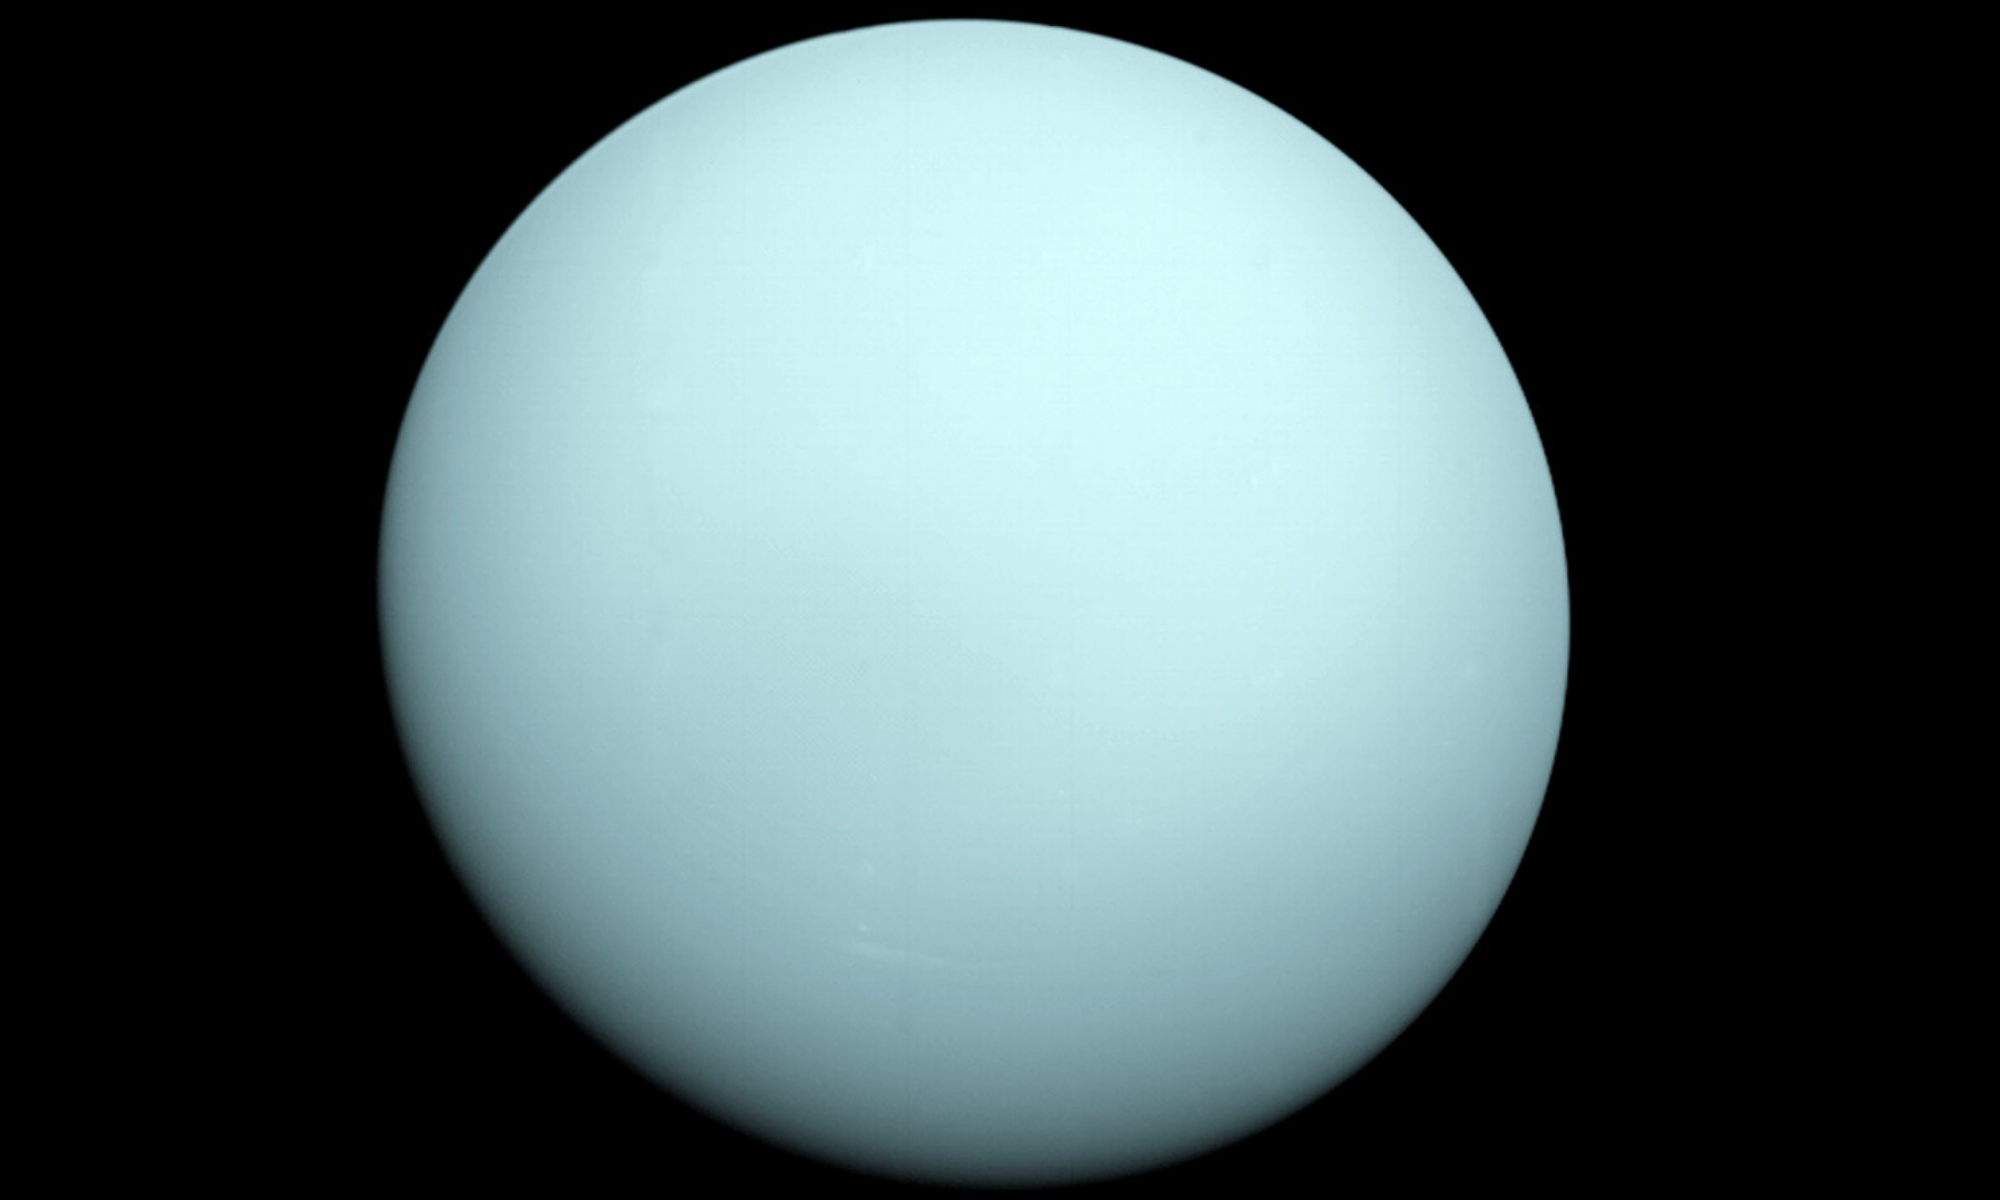 Webb adds another ringed world with new image of Uranus | ESA/Webb